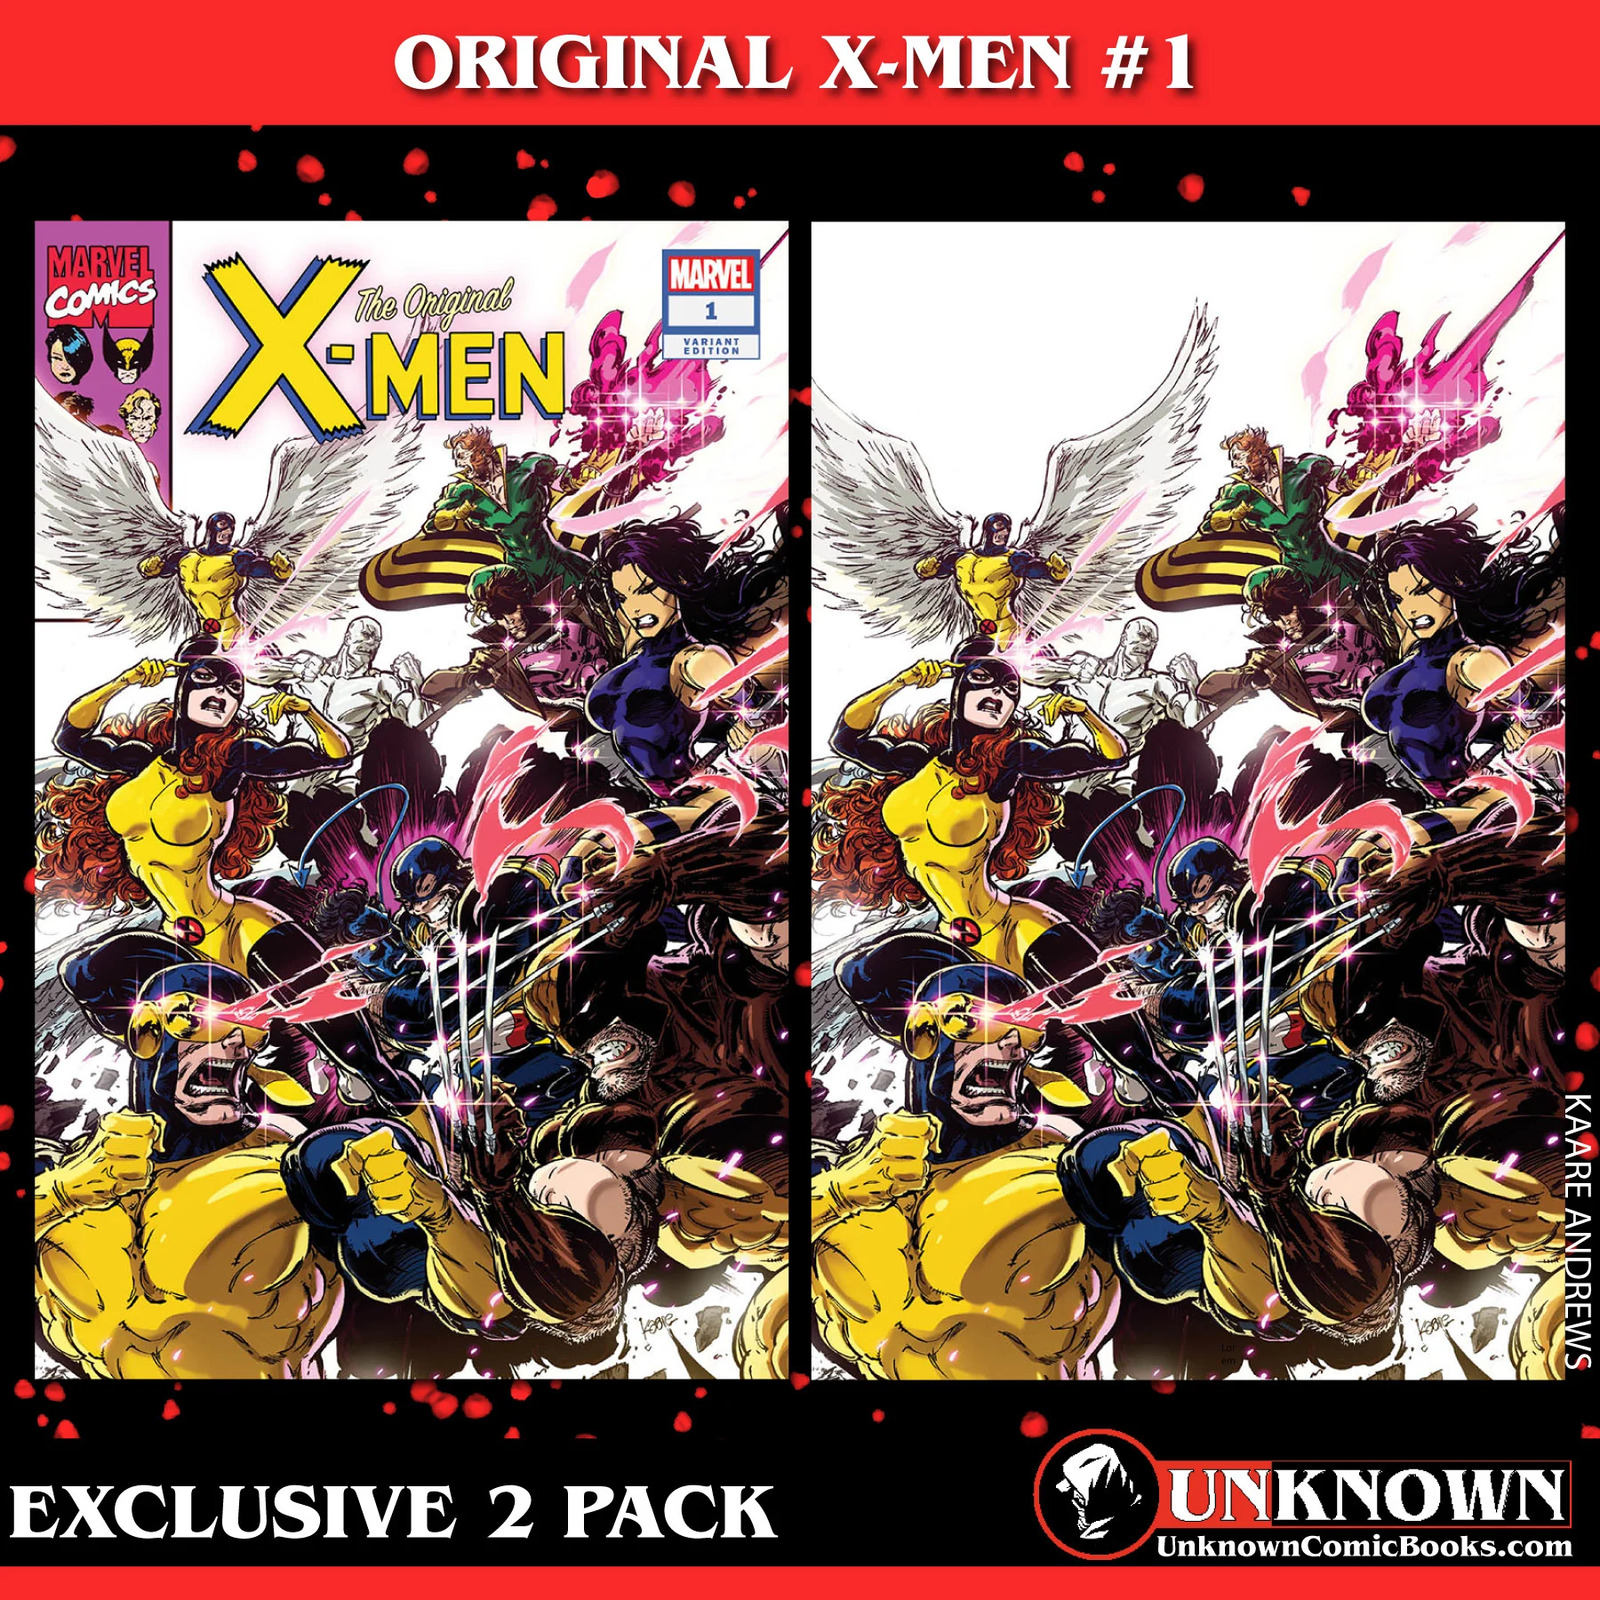 [2 PACK] ORIGINAL X-MEN #1 UNKNOWN COMICS KAARE ANDREWS EXCLUSIVE VAR (12/20/202